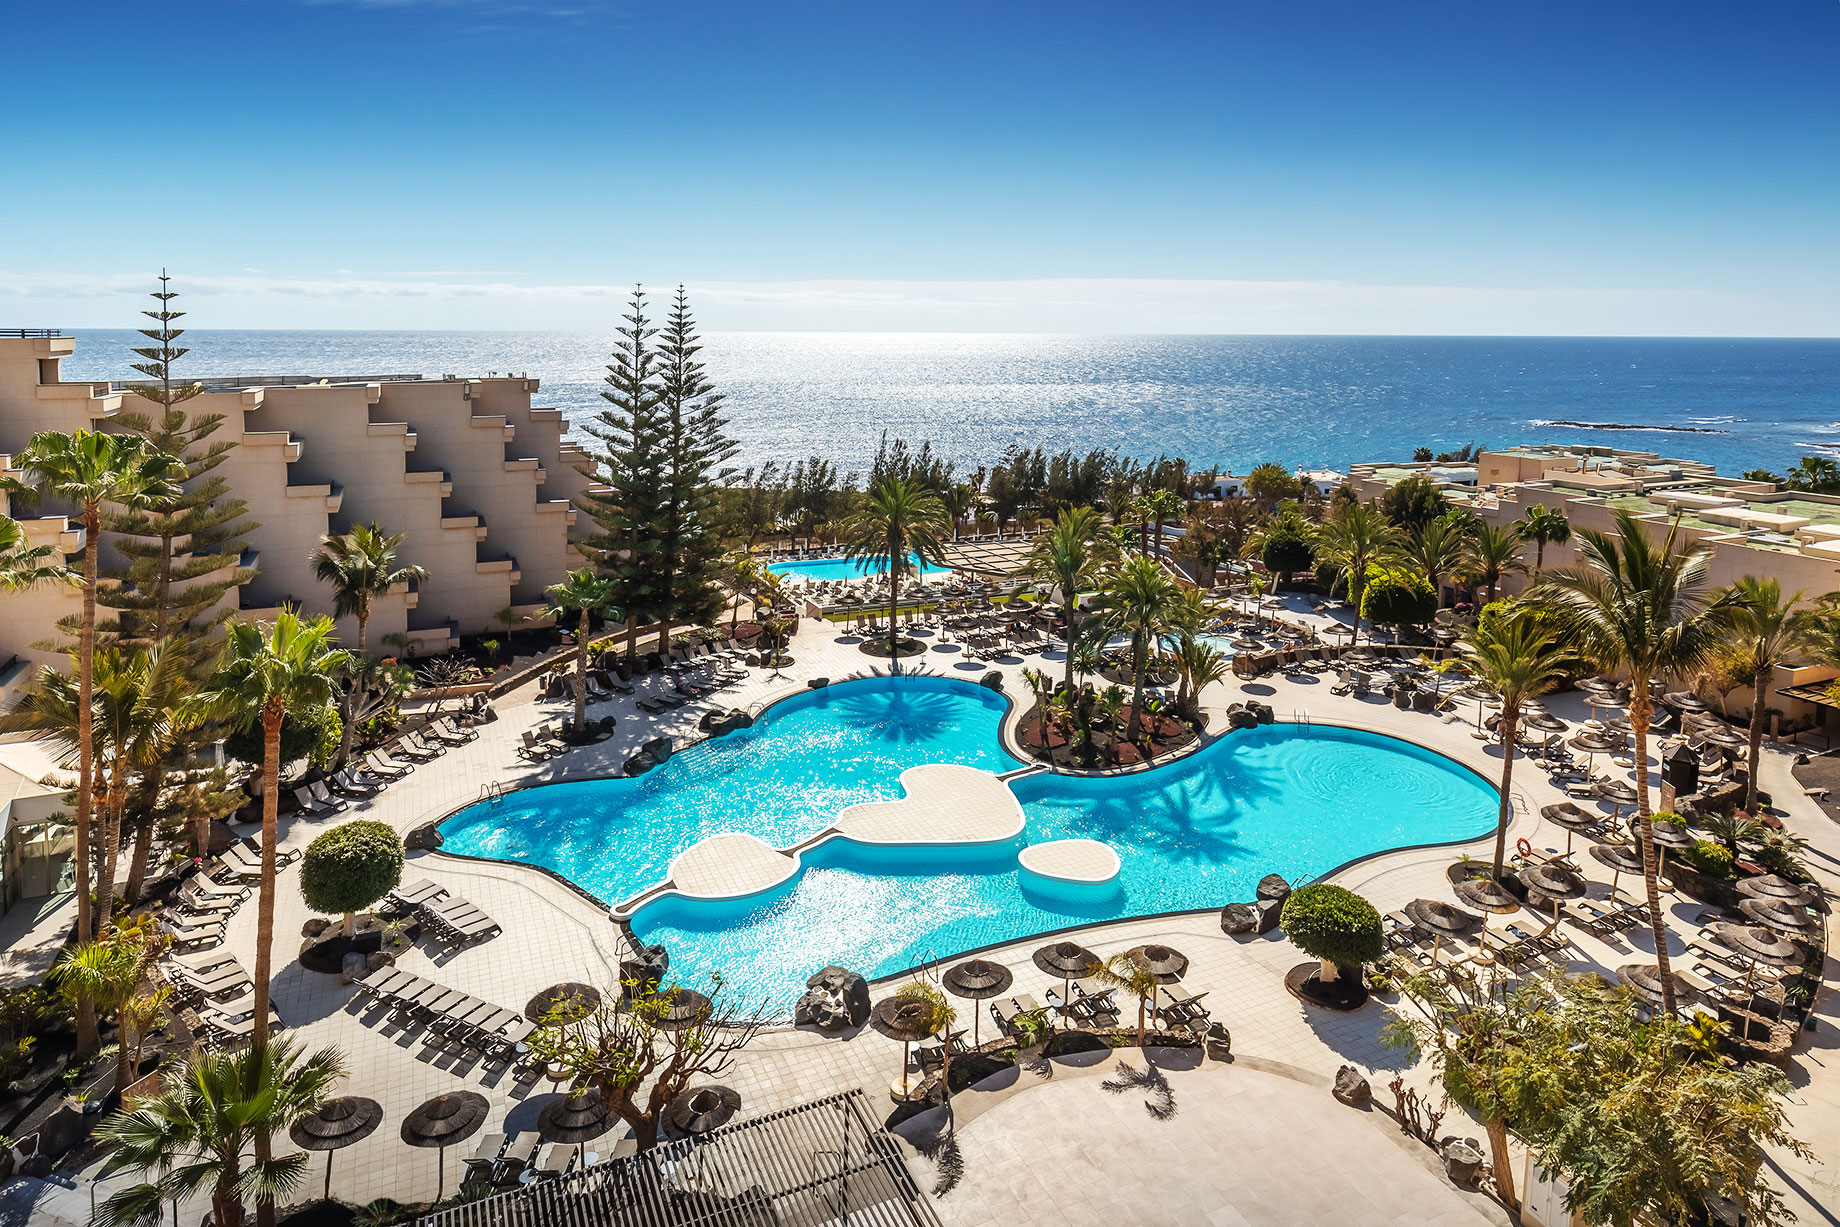 Barceló Lanzarote Active Resort - Costa Teguise, Spain